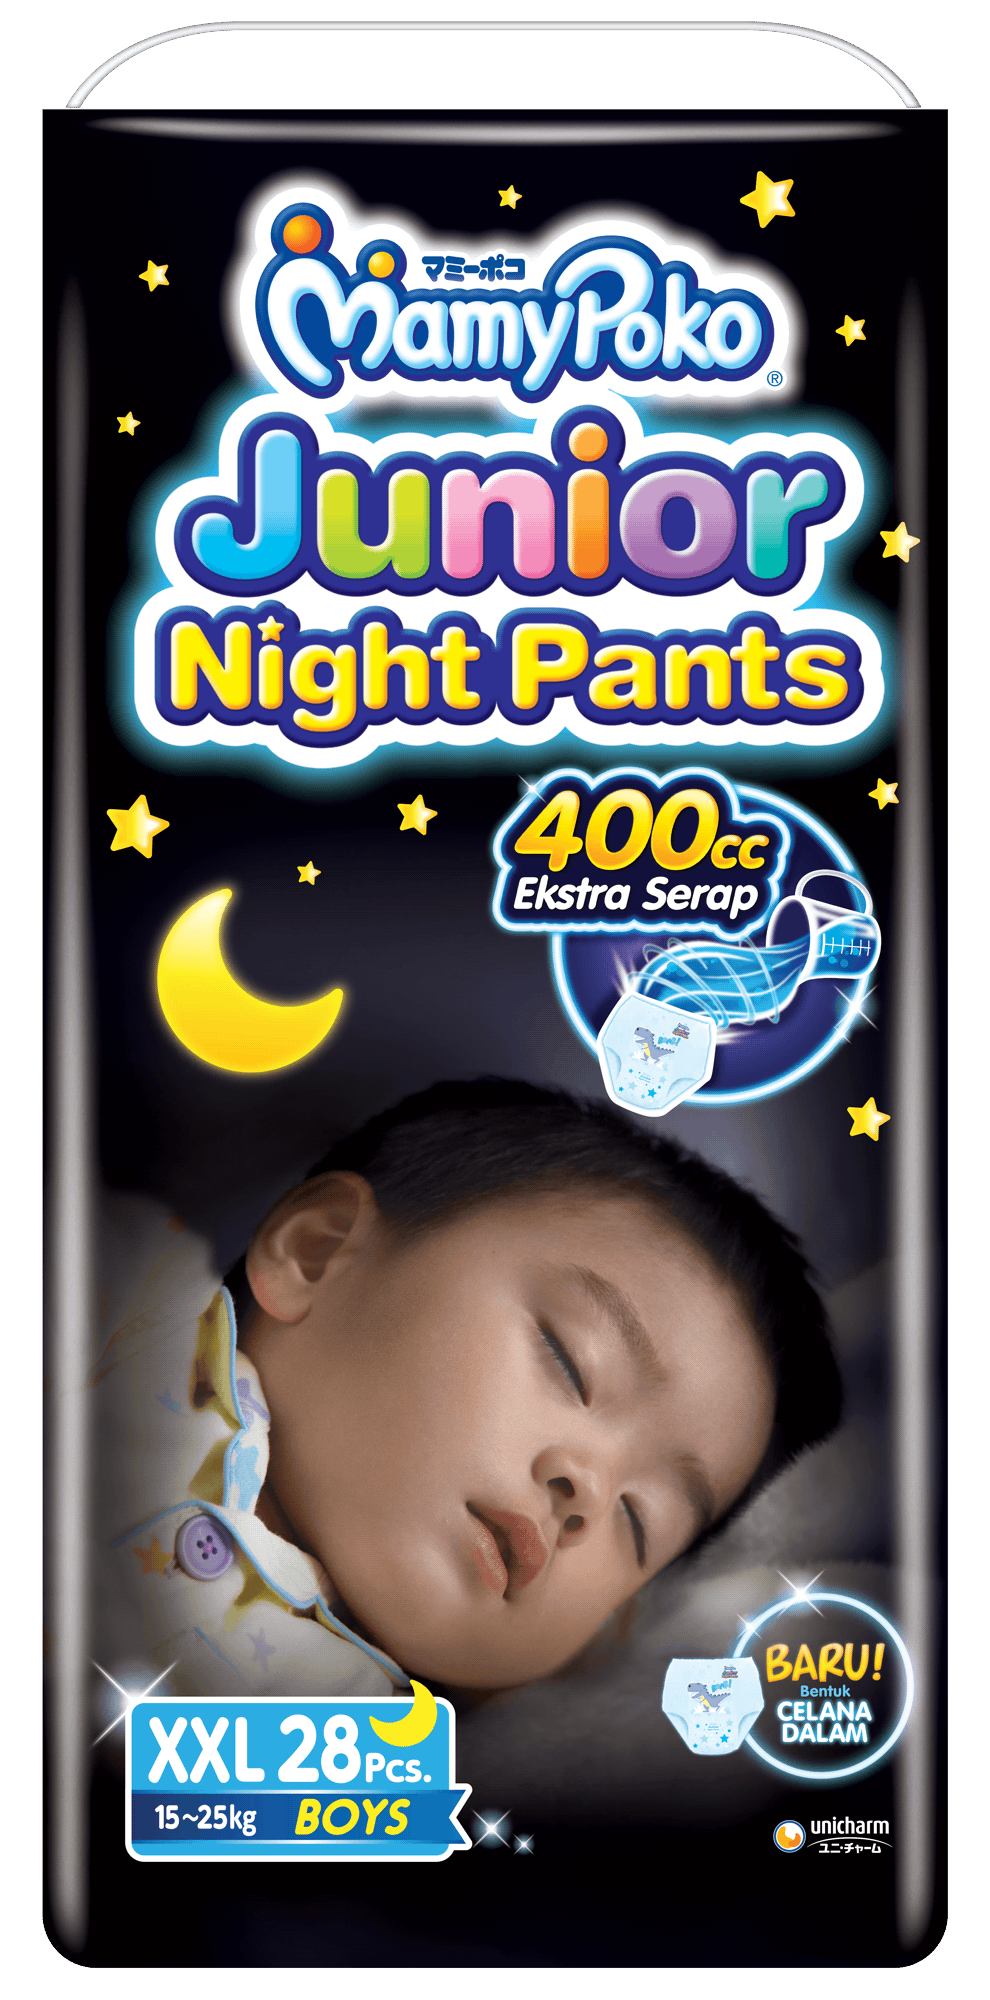 MamyPoko Junior Night Pants(Celana Malam)